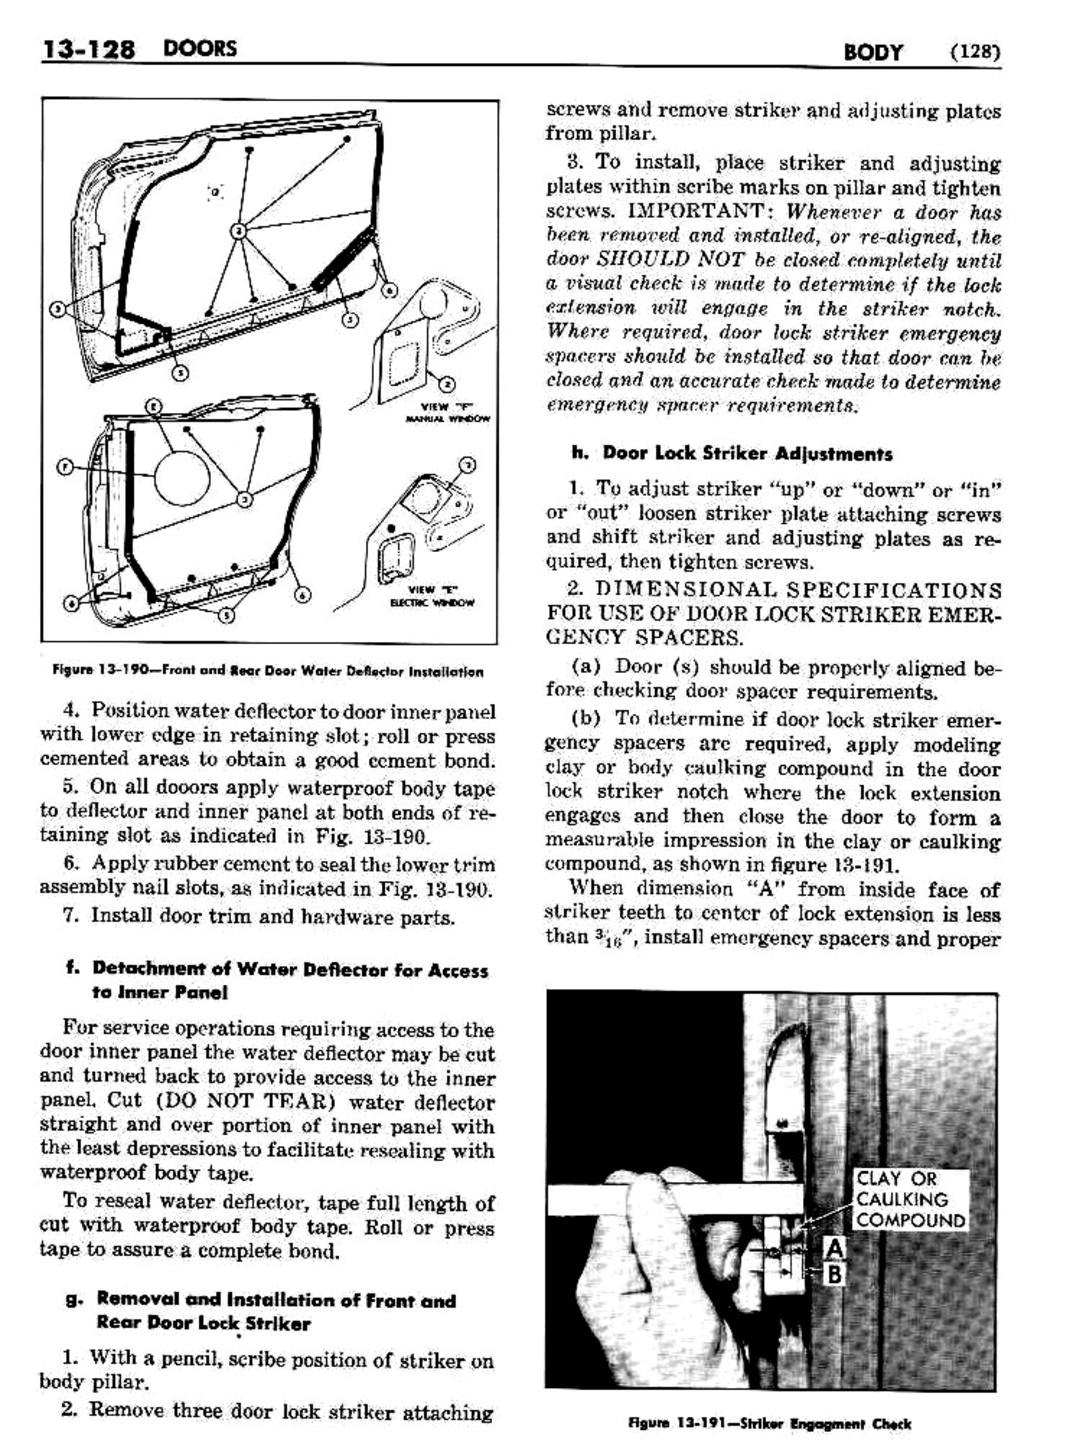 n_1958 Buick Body Service Manual-129-129.jpg